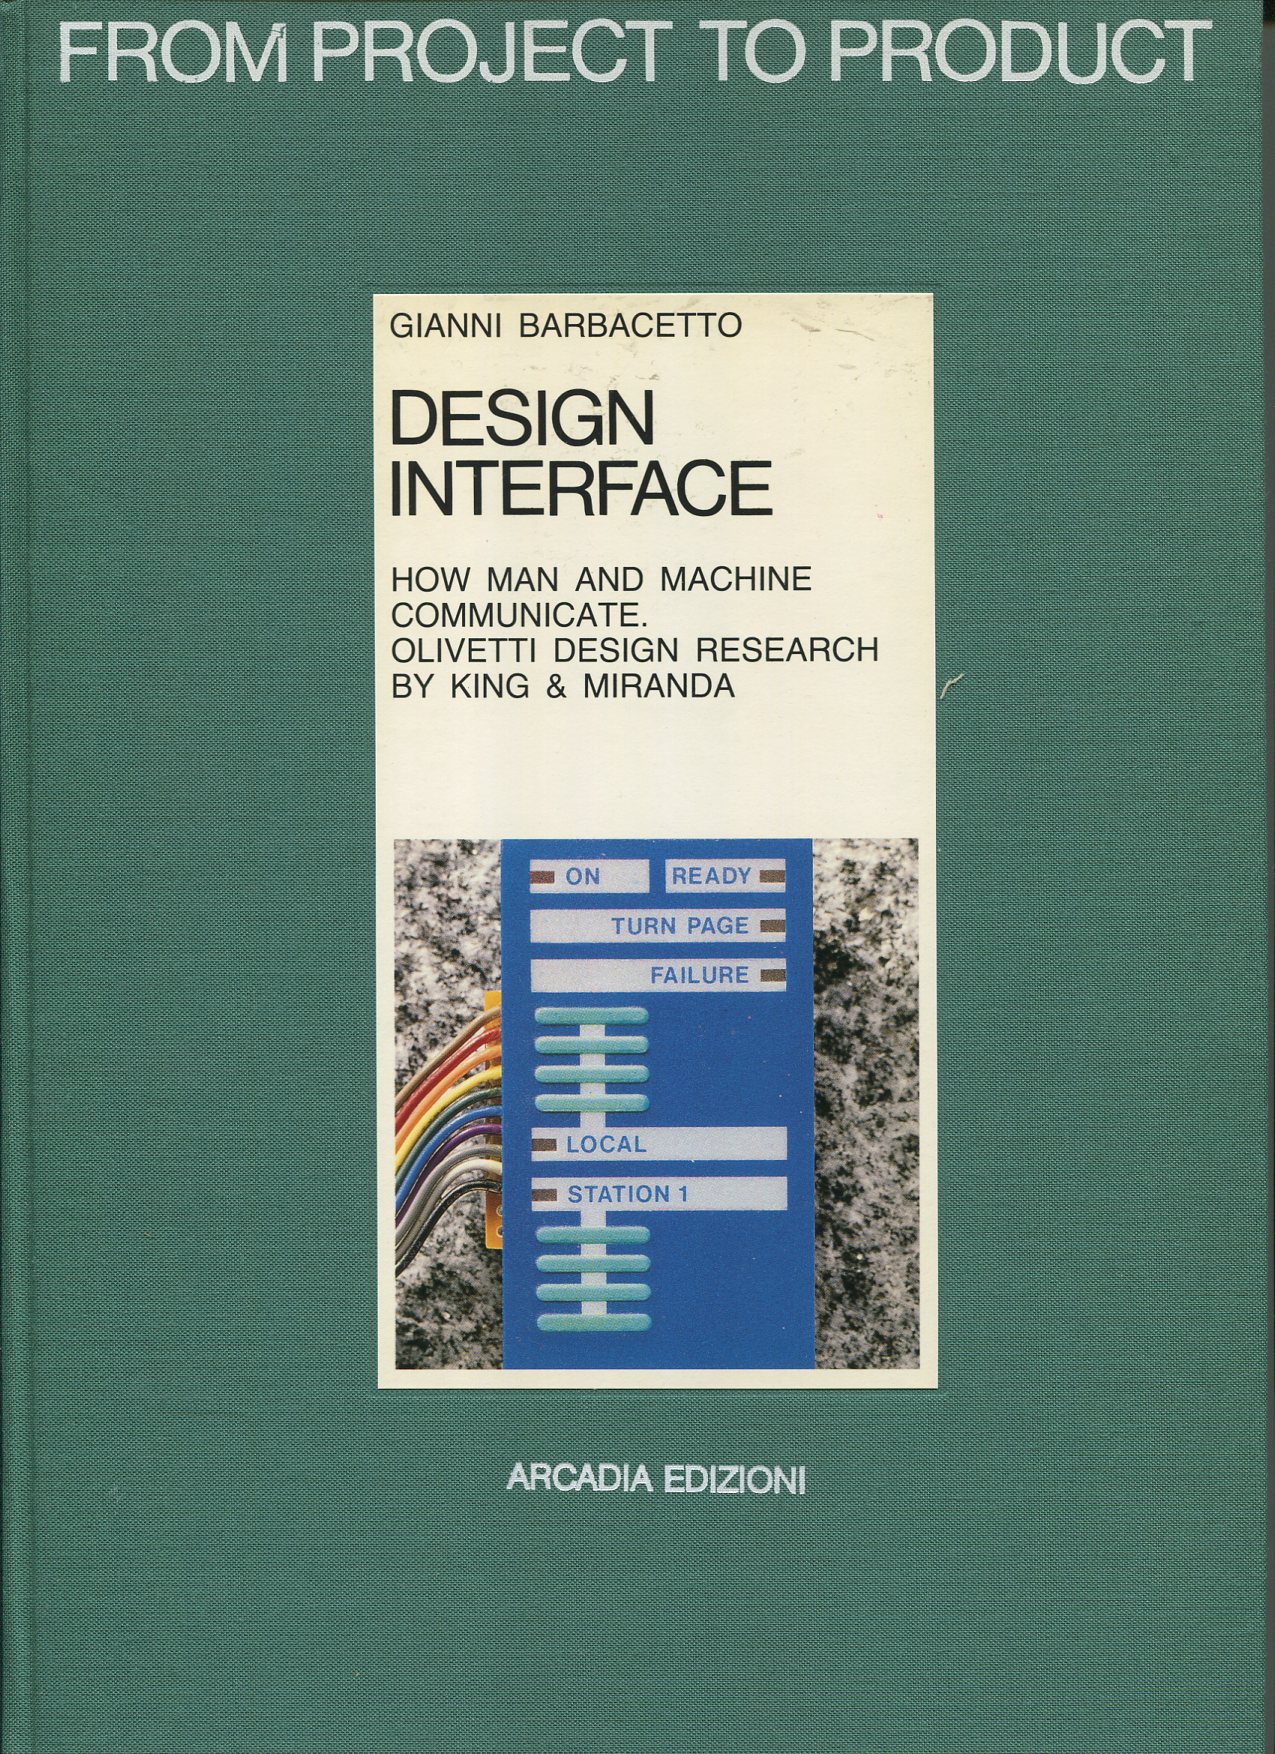 Design Interface – How man and machine communicate. Olivetti design research by King & Miranda